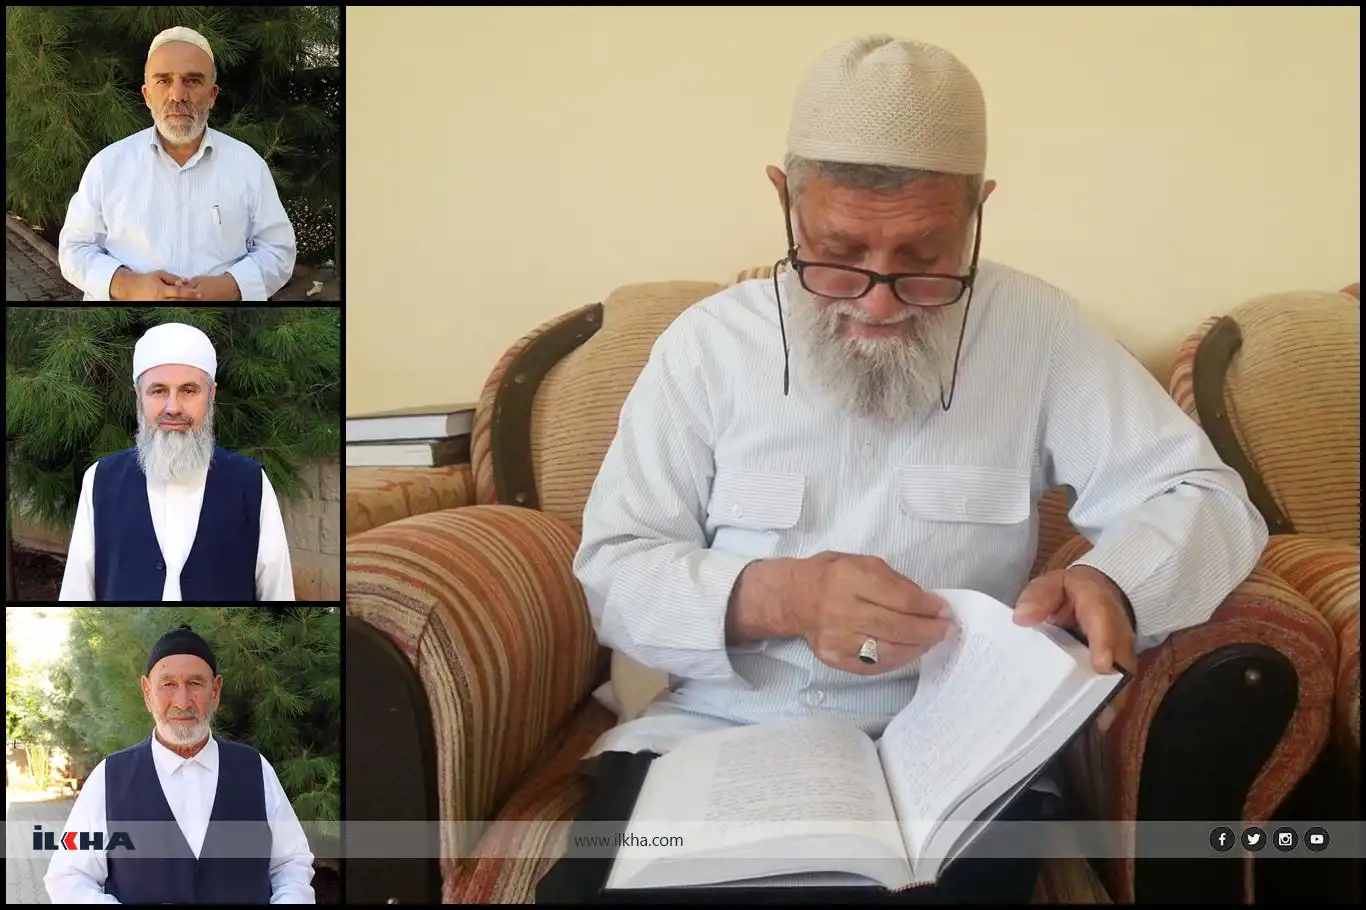 Legacy of dedication: Remembering Mullah Mustafa Durgun's lifelong commitment to education and faith